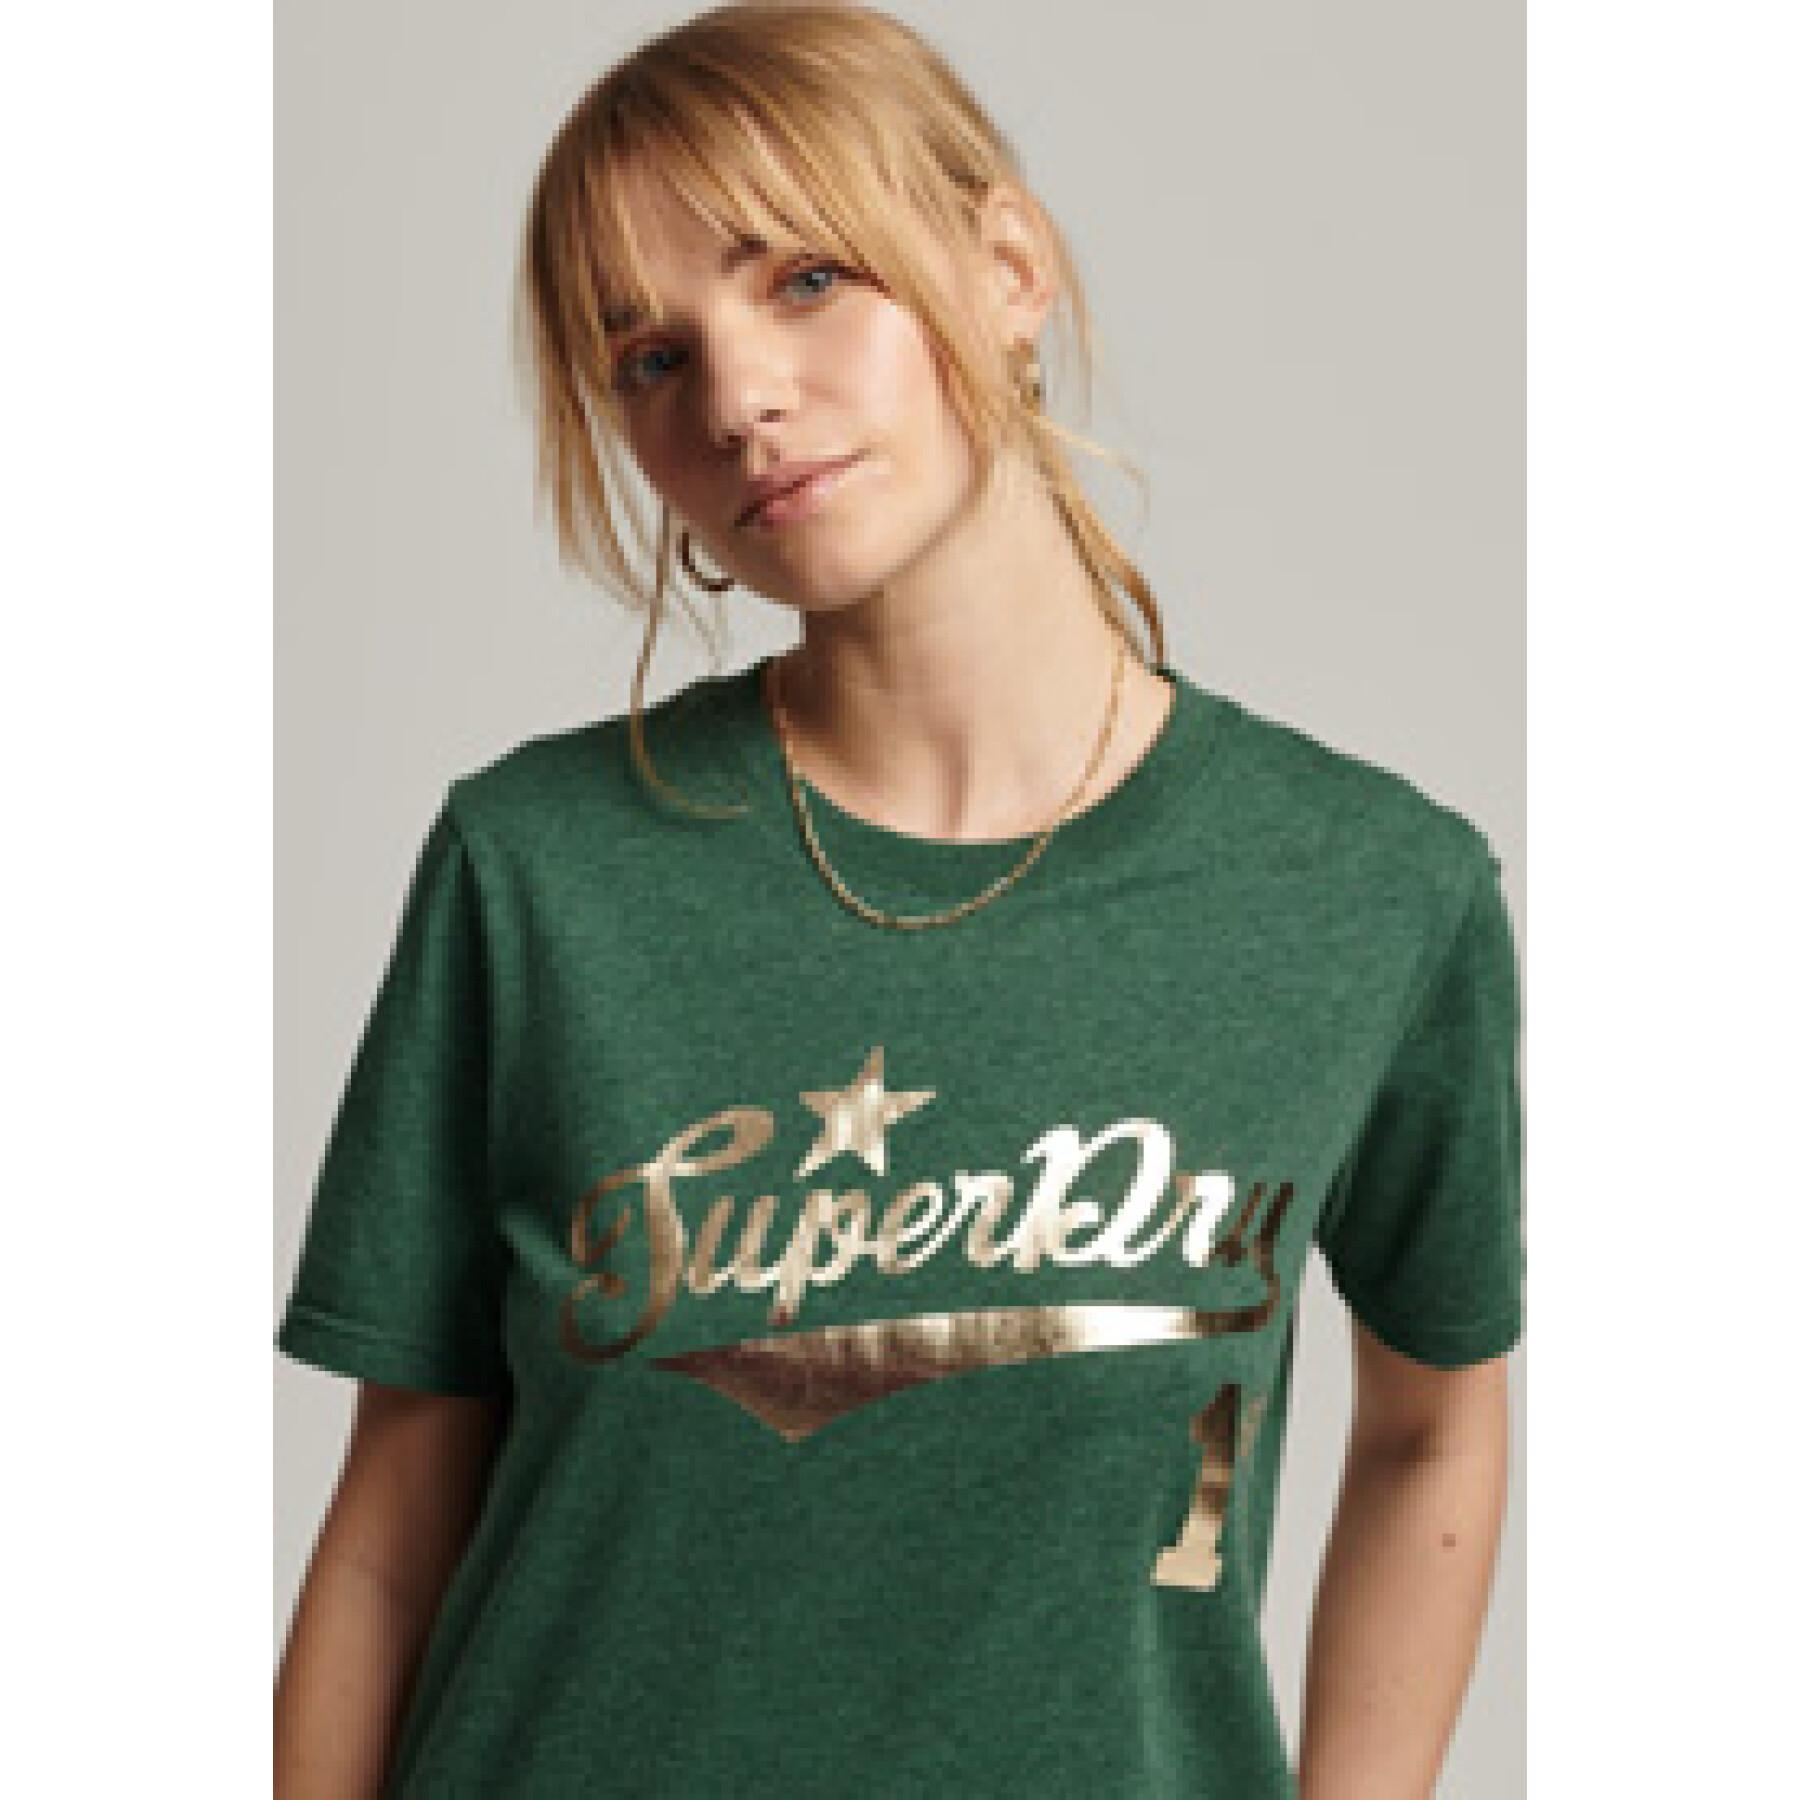 T-shirt donna a maniche corte Superdry Vintage Script Style College